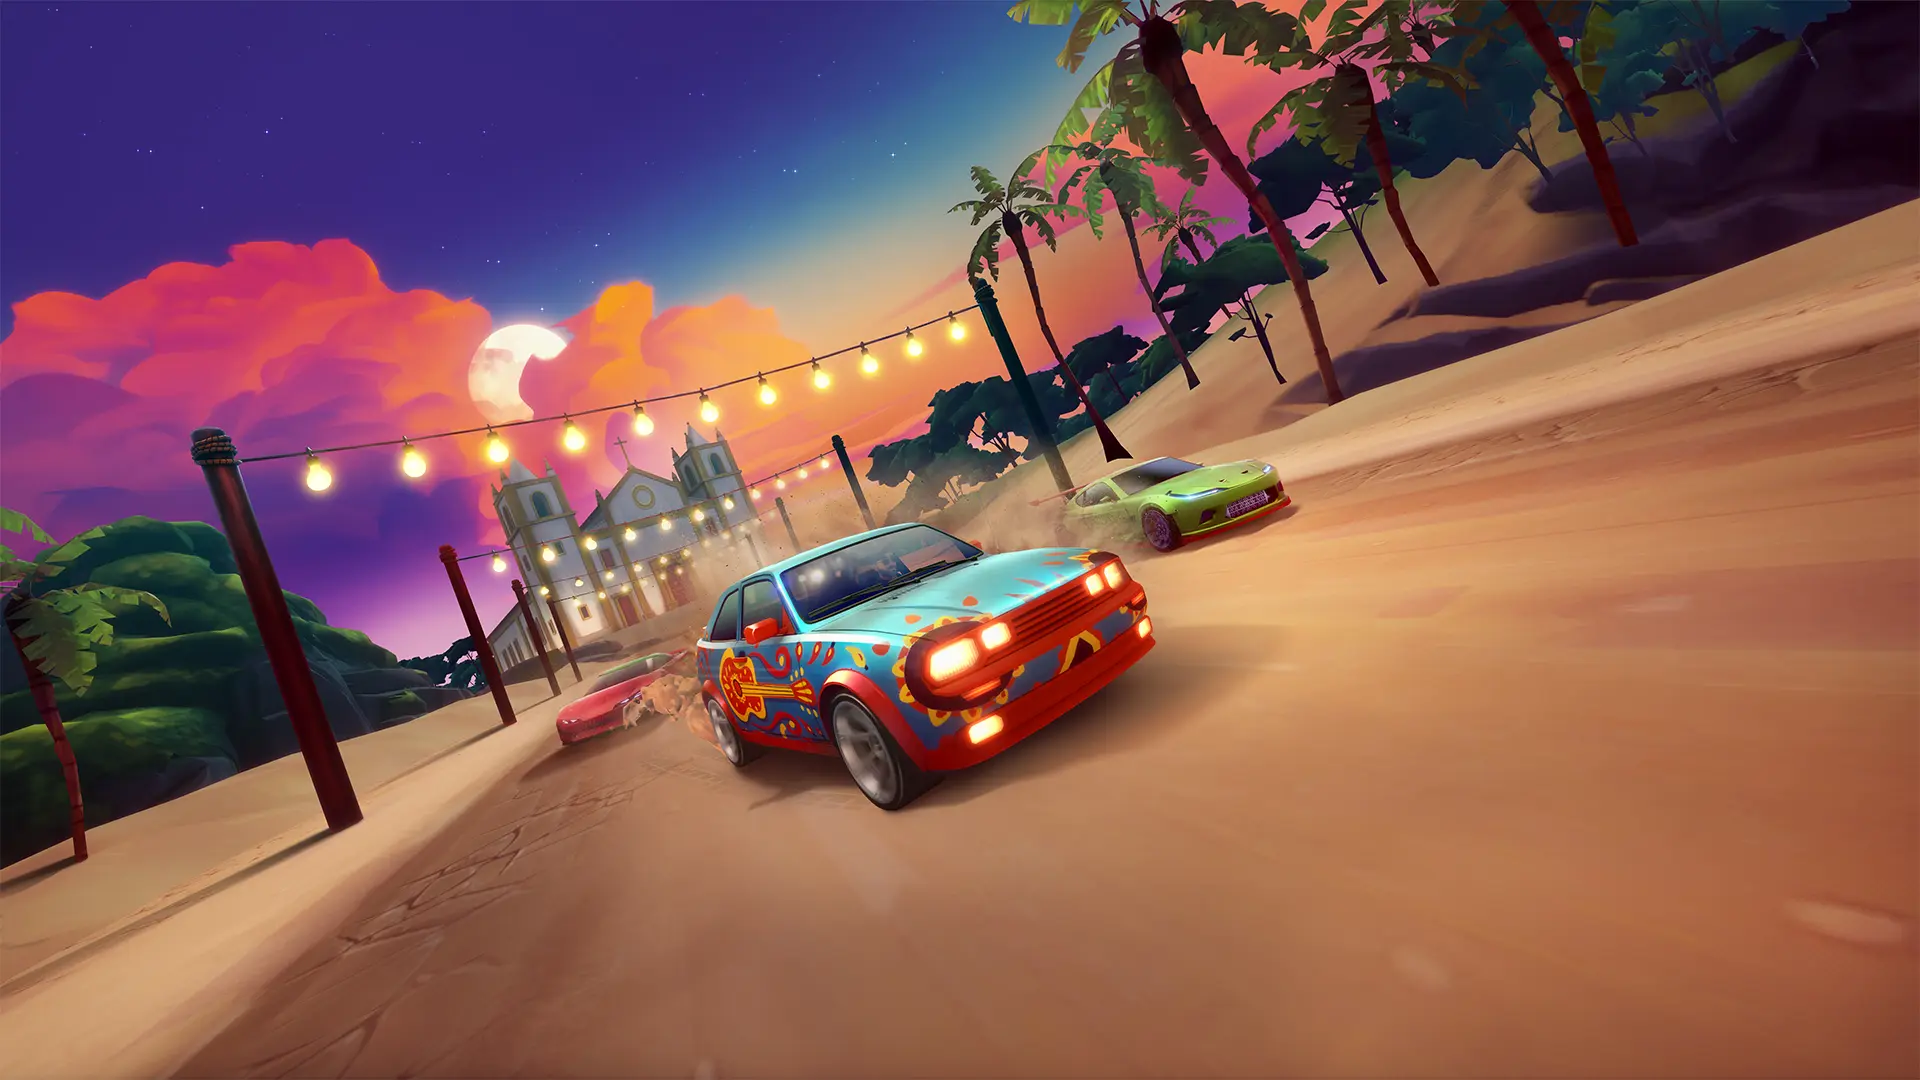 Cover image for post: New Update: Local Multiplayer + Viva La Fiesta!